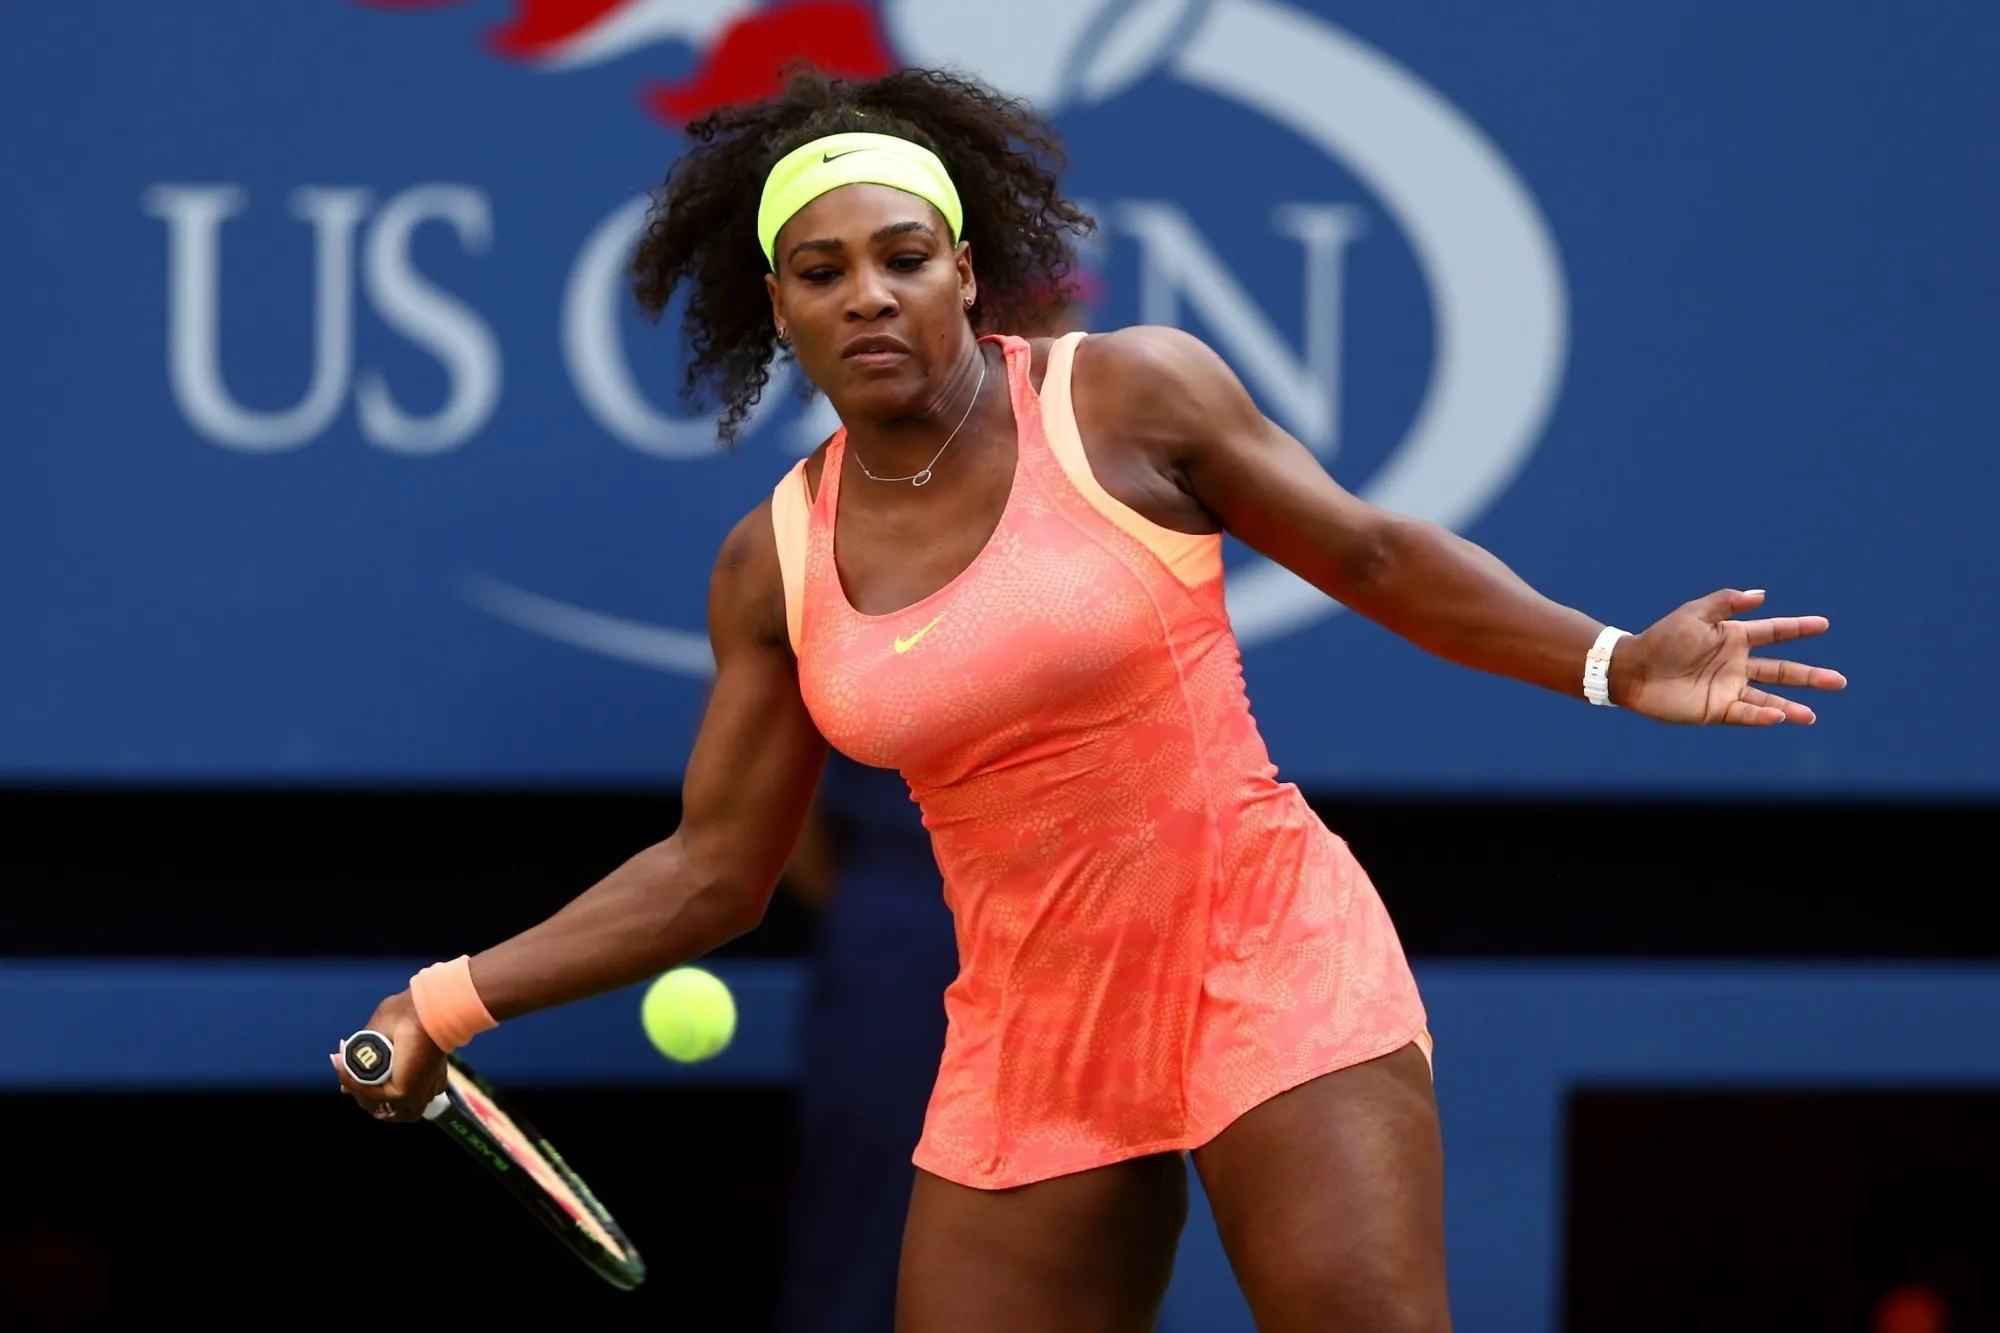 Serena Williams, Iga Swiatek headline US Open entry list